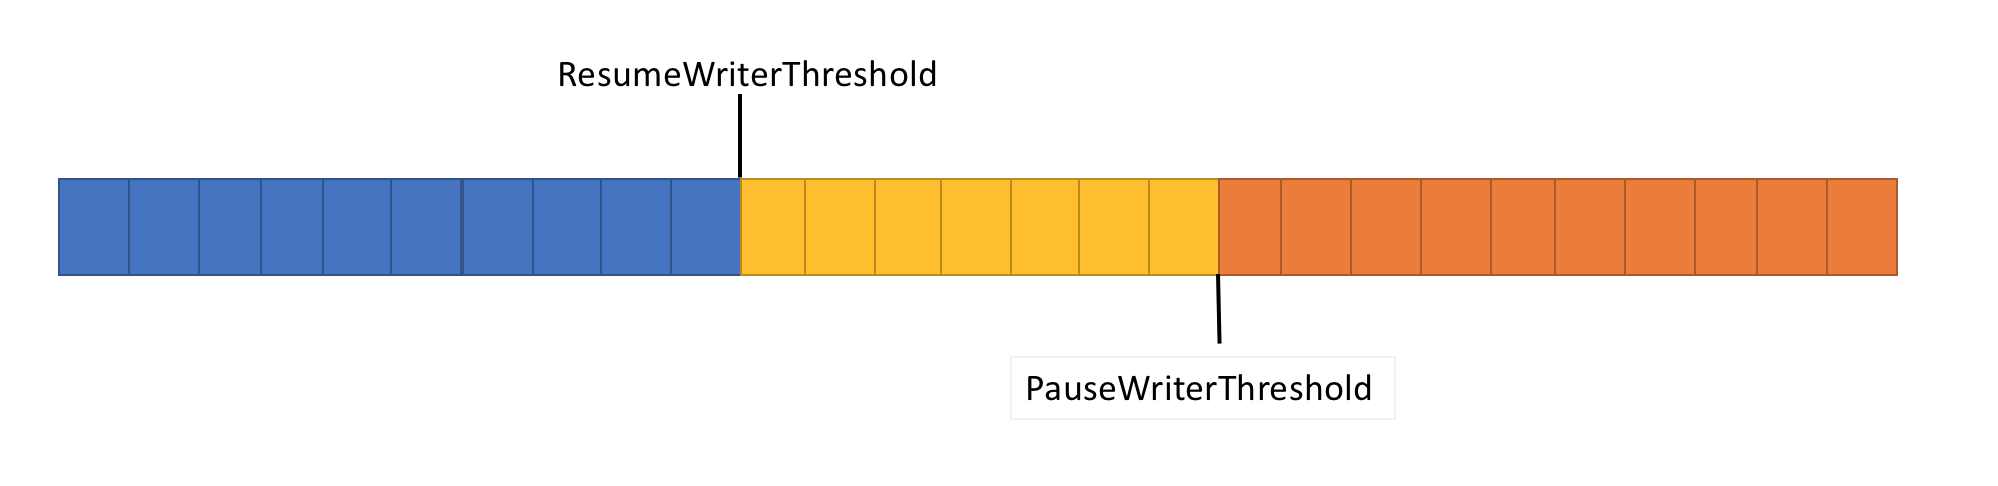 Diagramma con ResumeWriterThreshold e PauseWriterThreshold